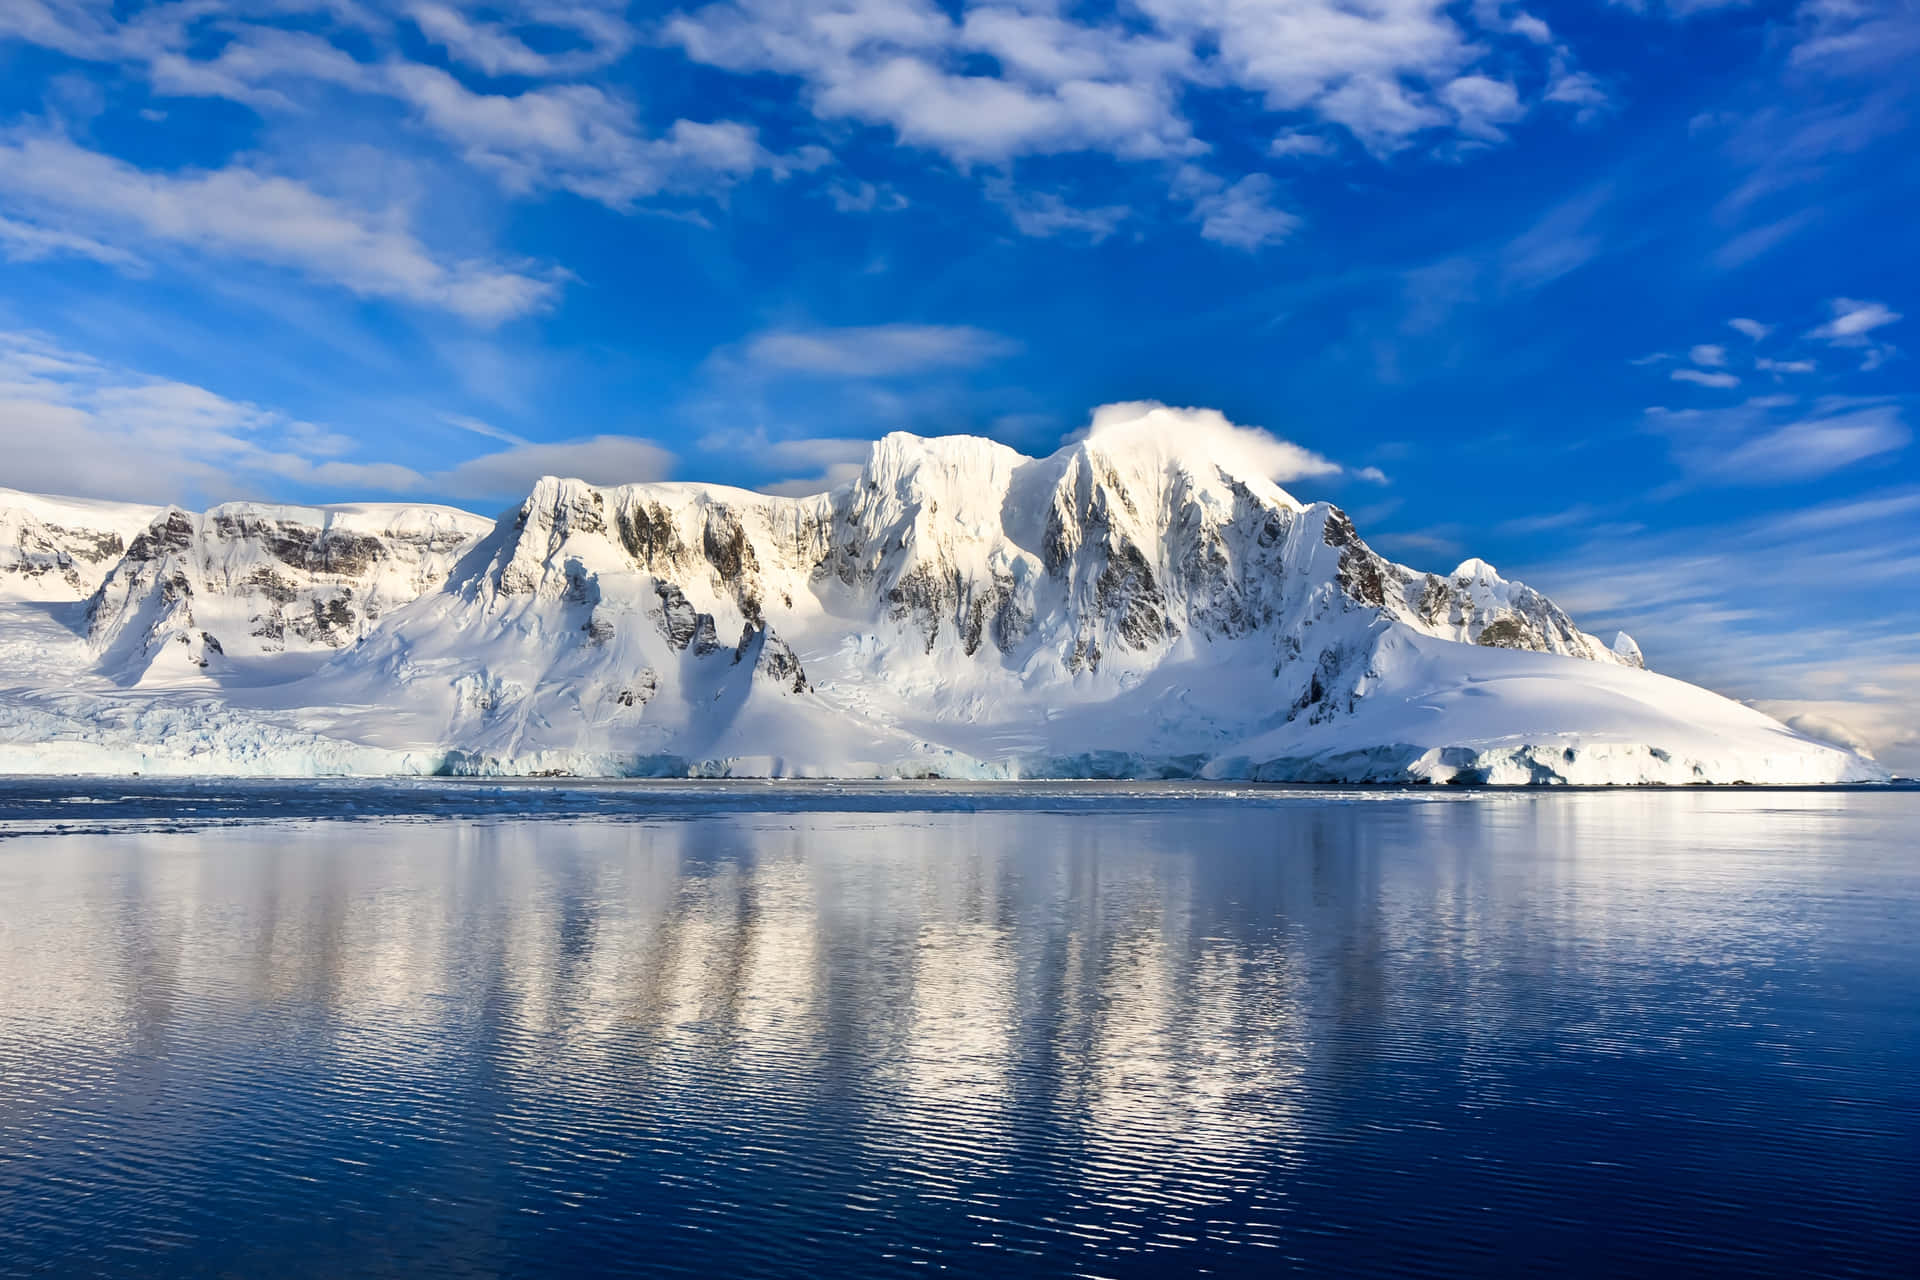 Captivating View Of Iceberg In Pristine Antarctic Surroundings